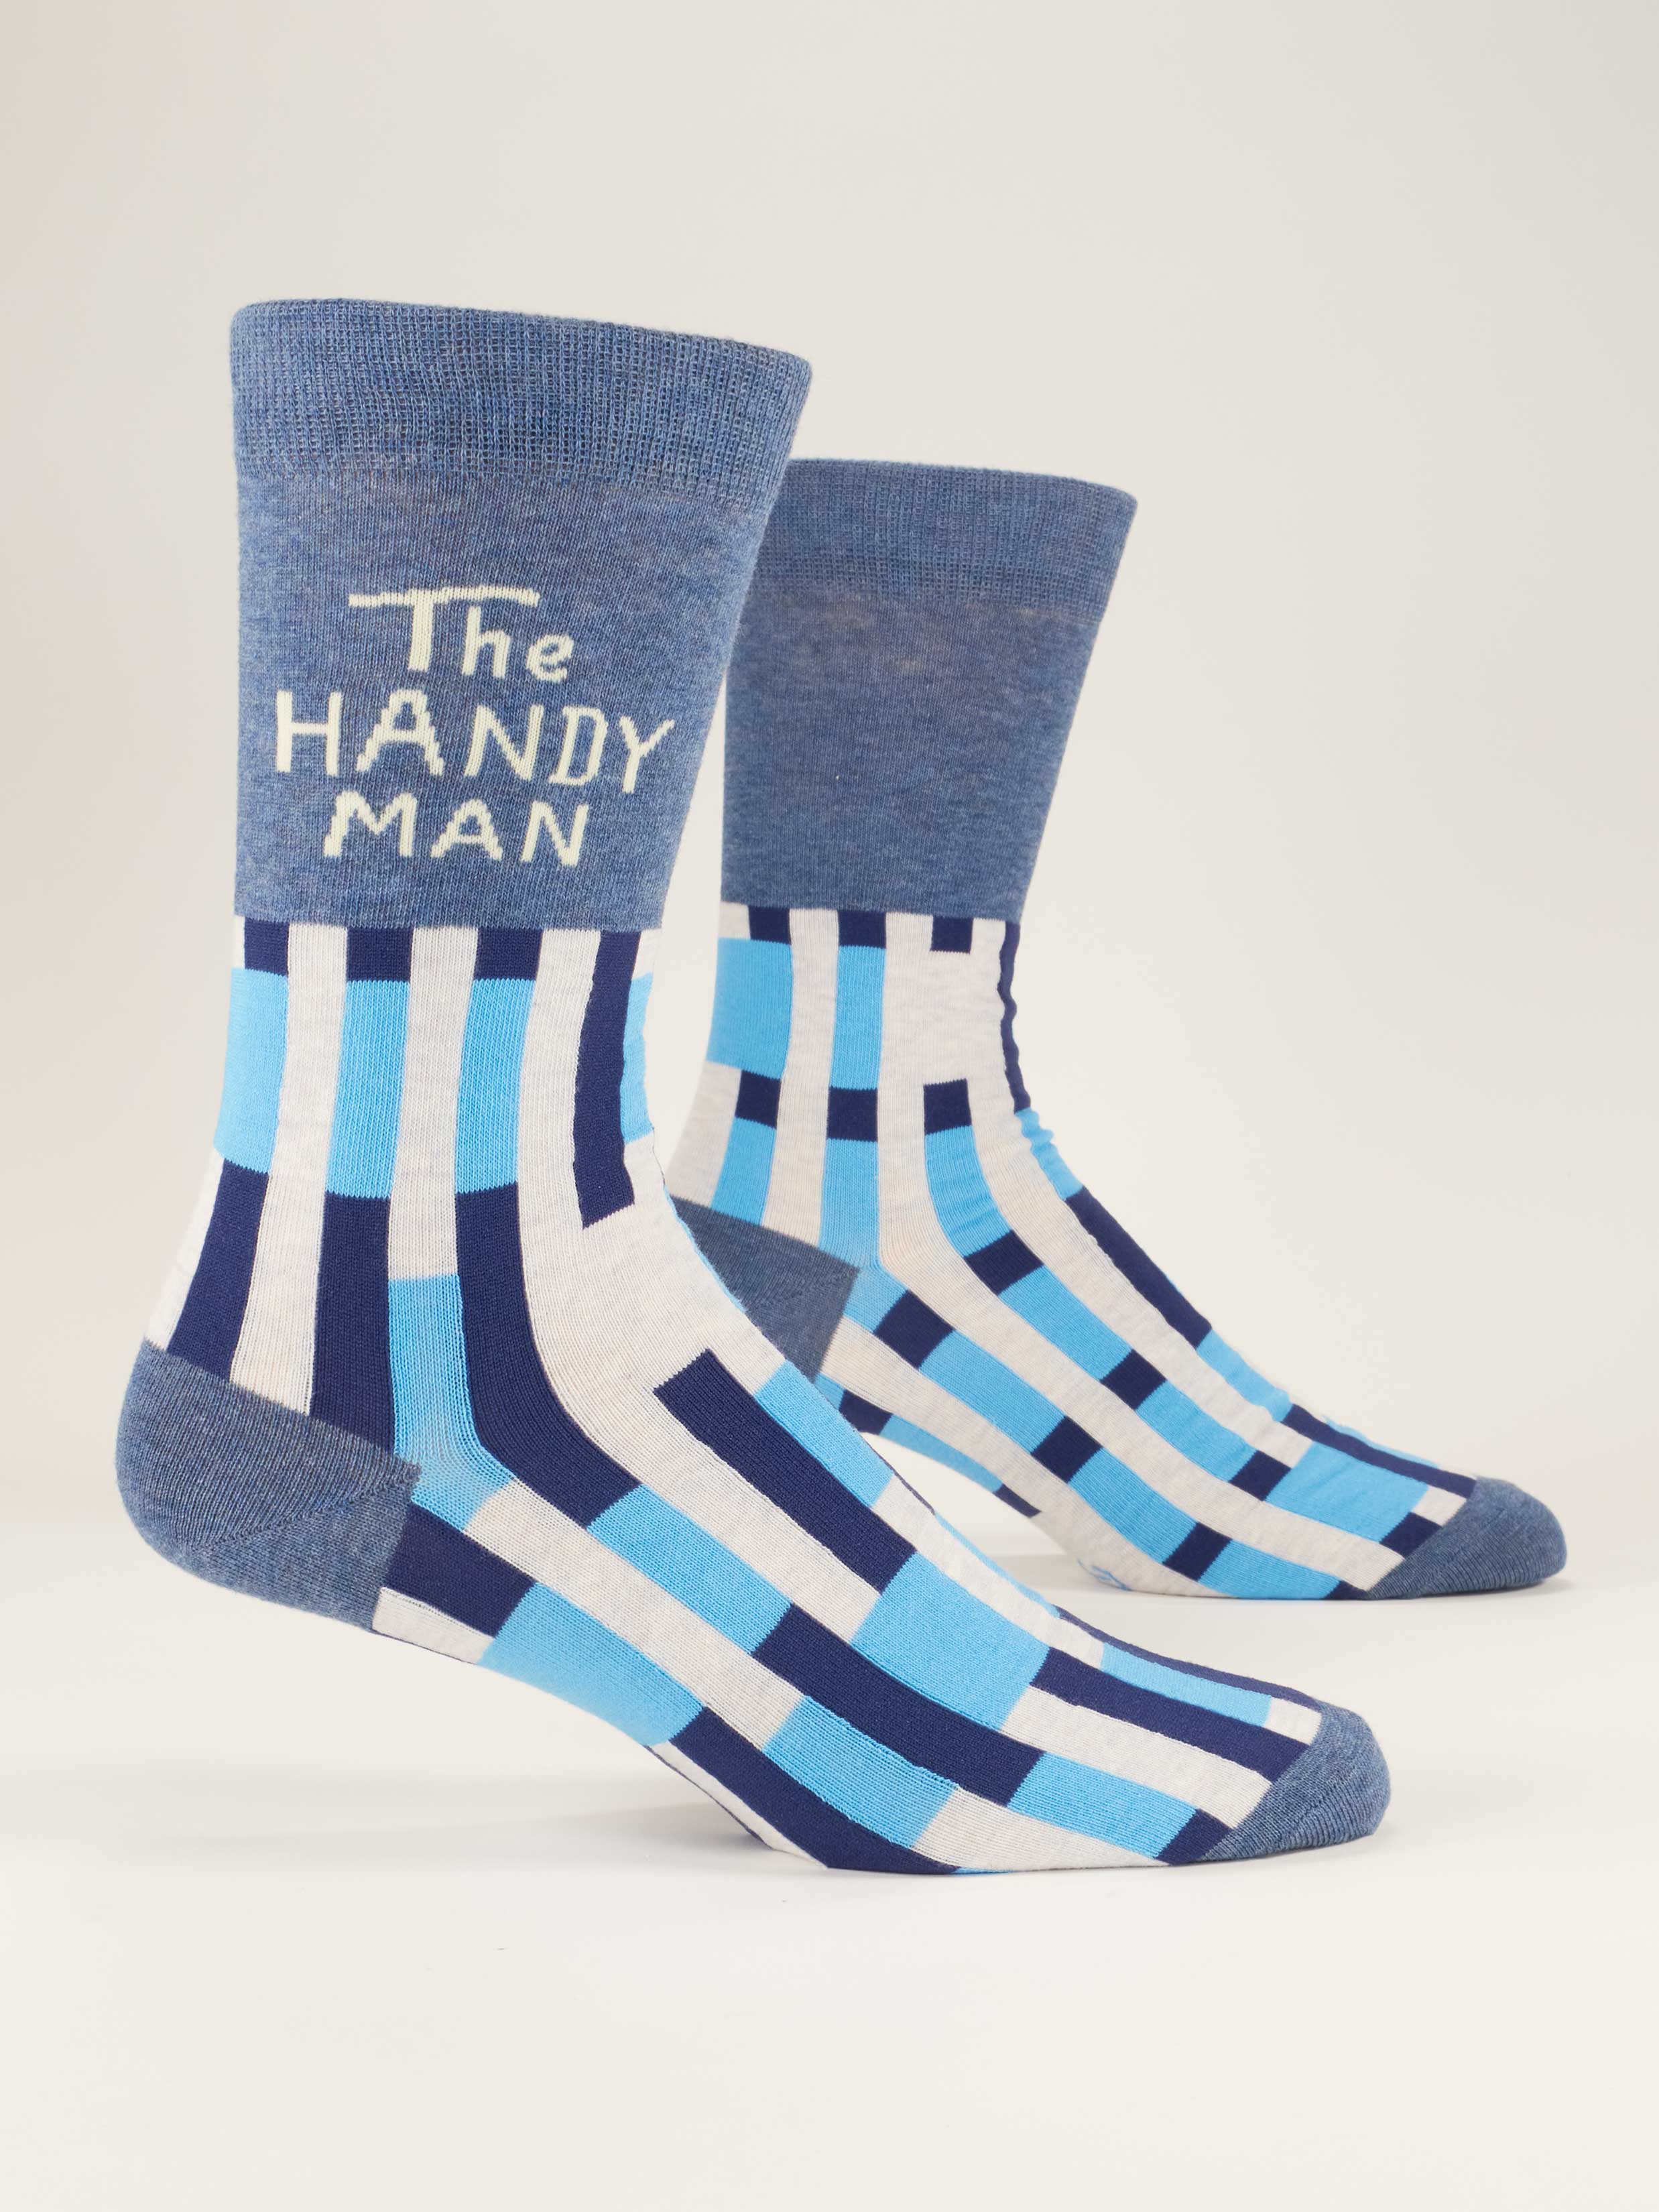 Socks Men The Handy Man